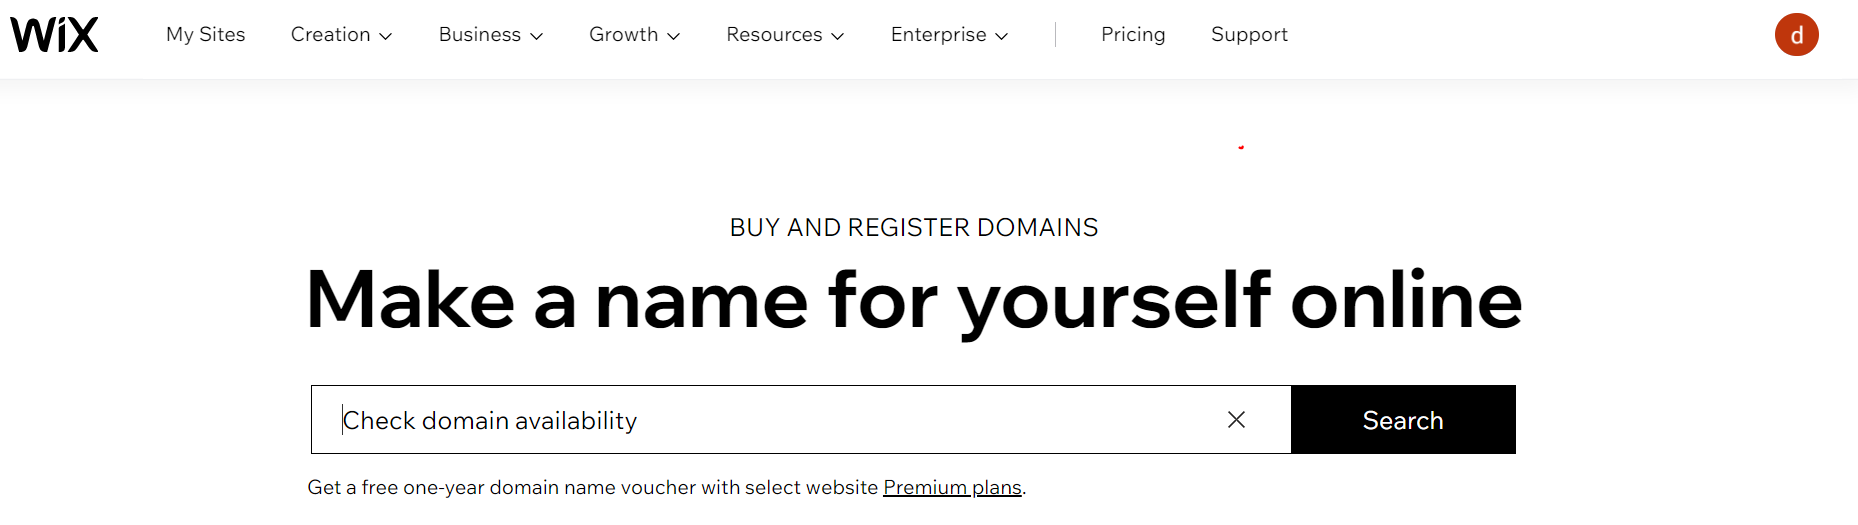 Wix Domain Name